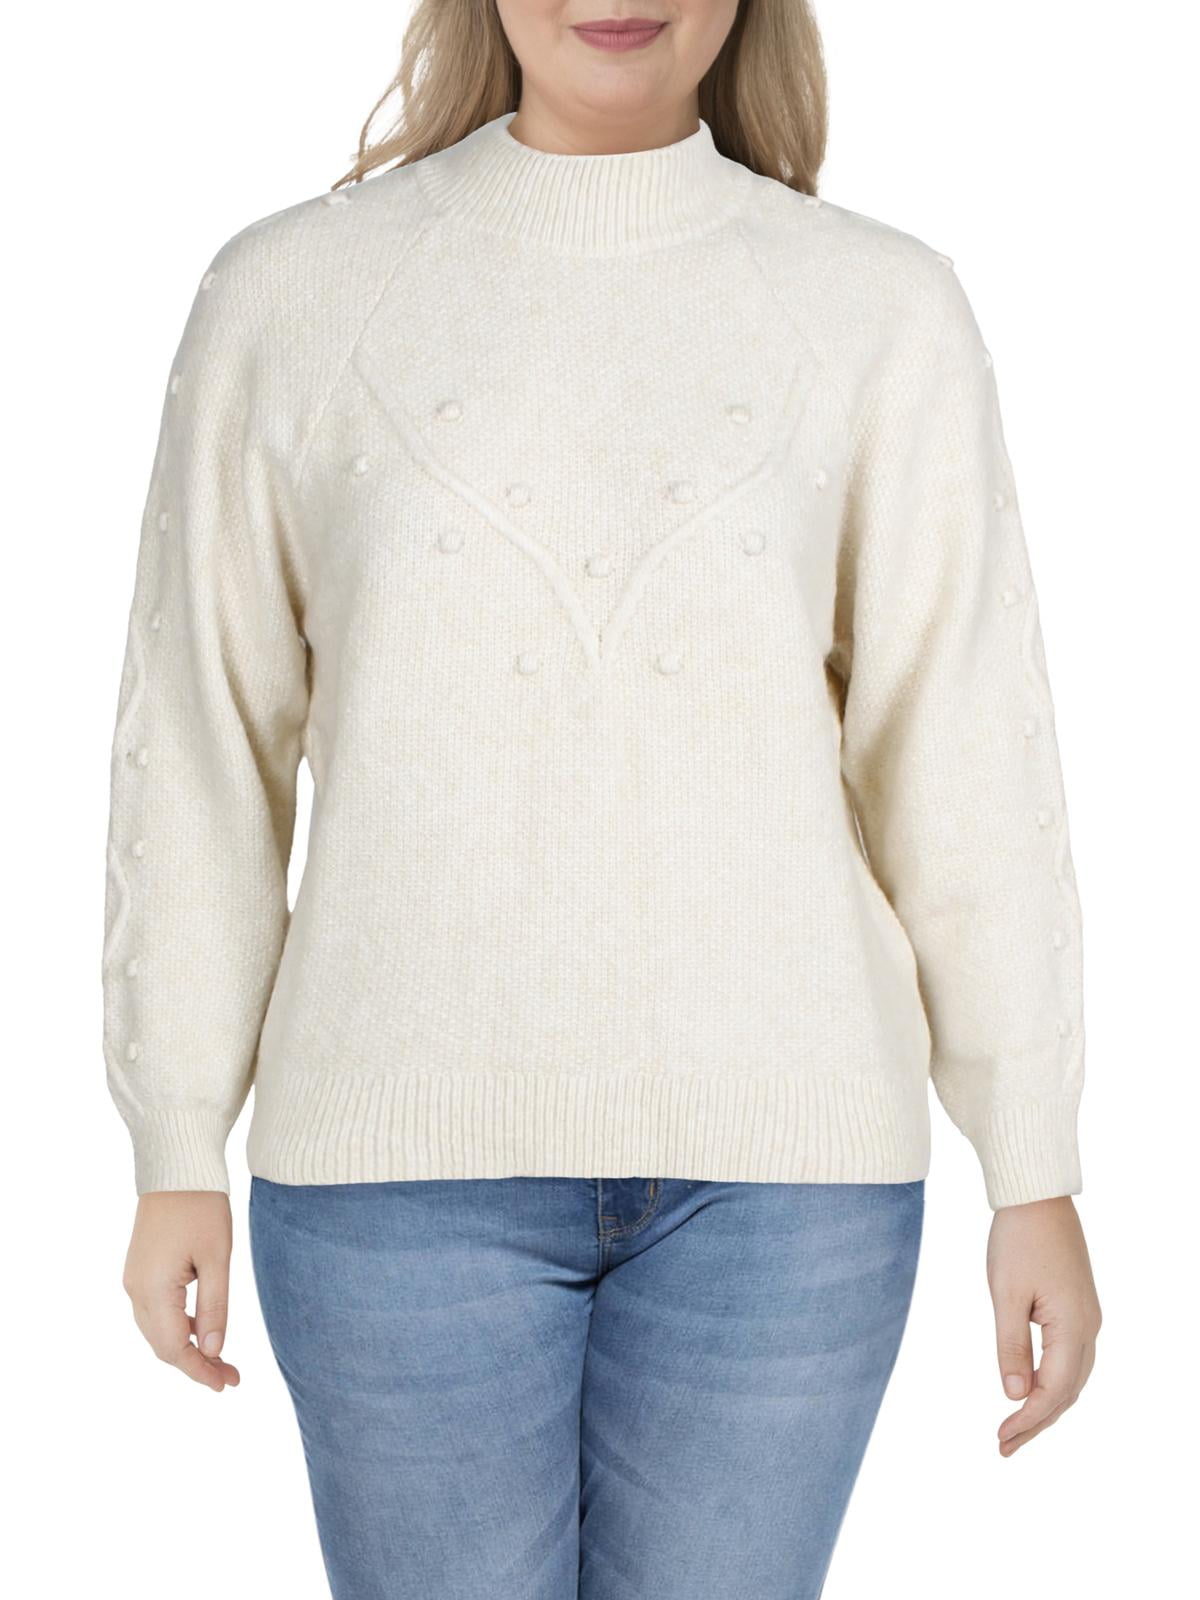 malm sikring definitive Vero Moda Womens Cub Popcorn High Neck Pullover Sweater Ivory XL -  Walmart.com